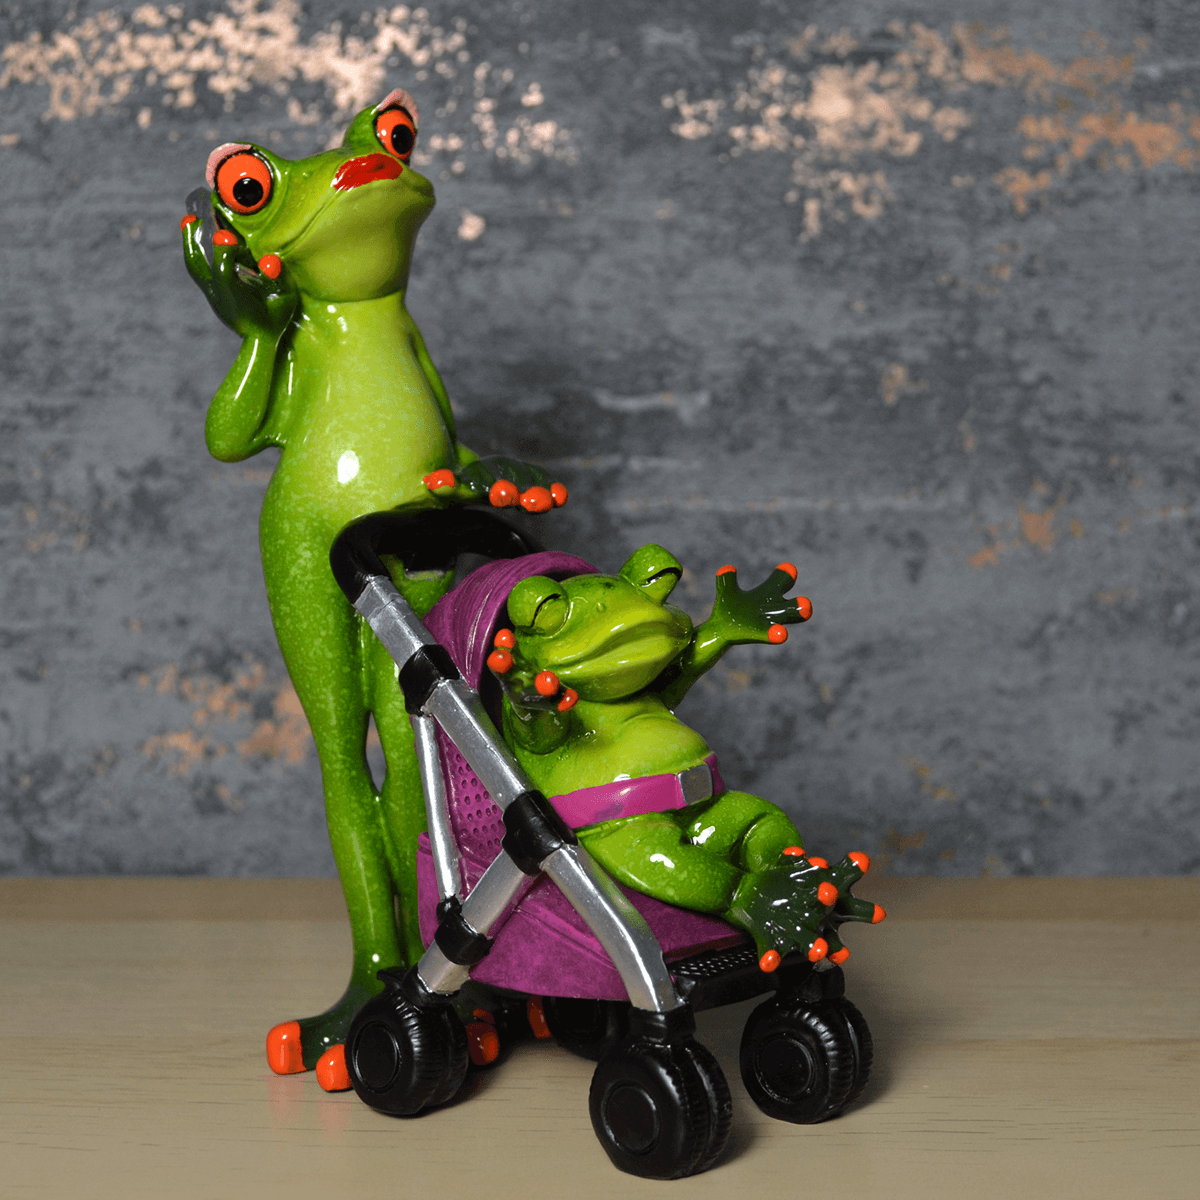 Comical Frog Ornament - Strolling - TwoBeeps.co.uk